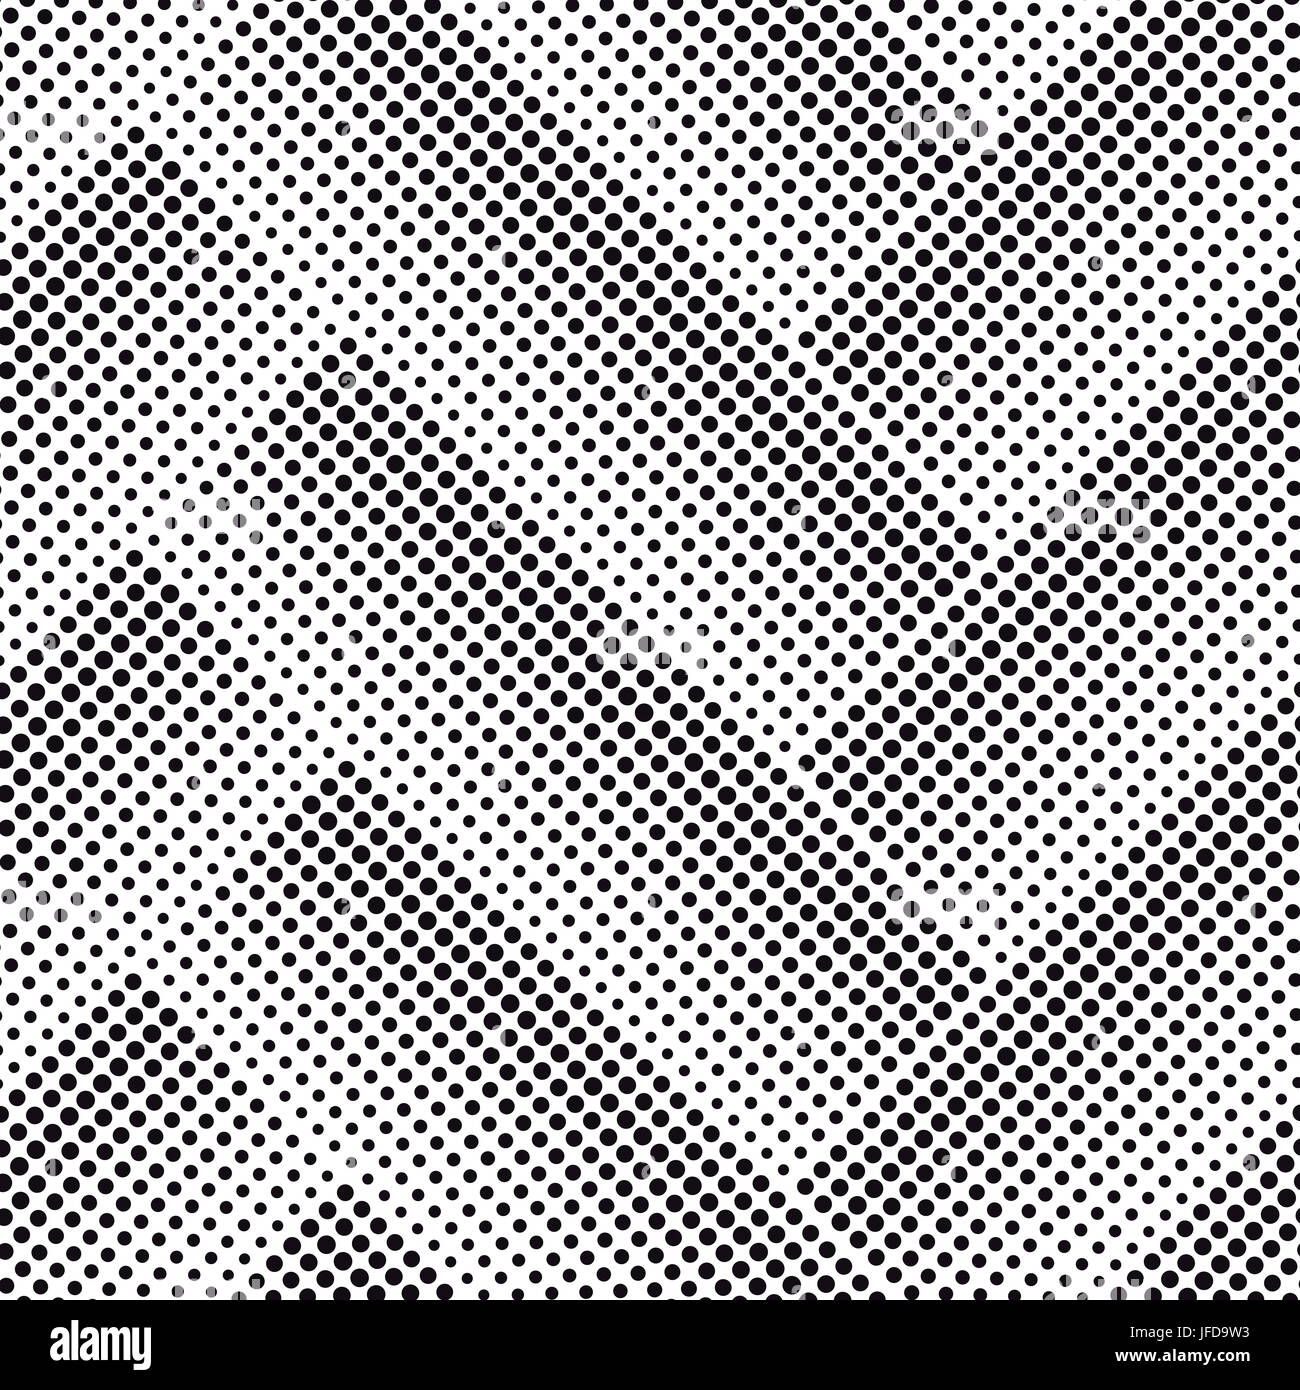 Raster dots background black white, Stock Photo